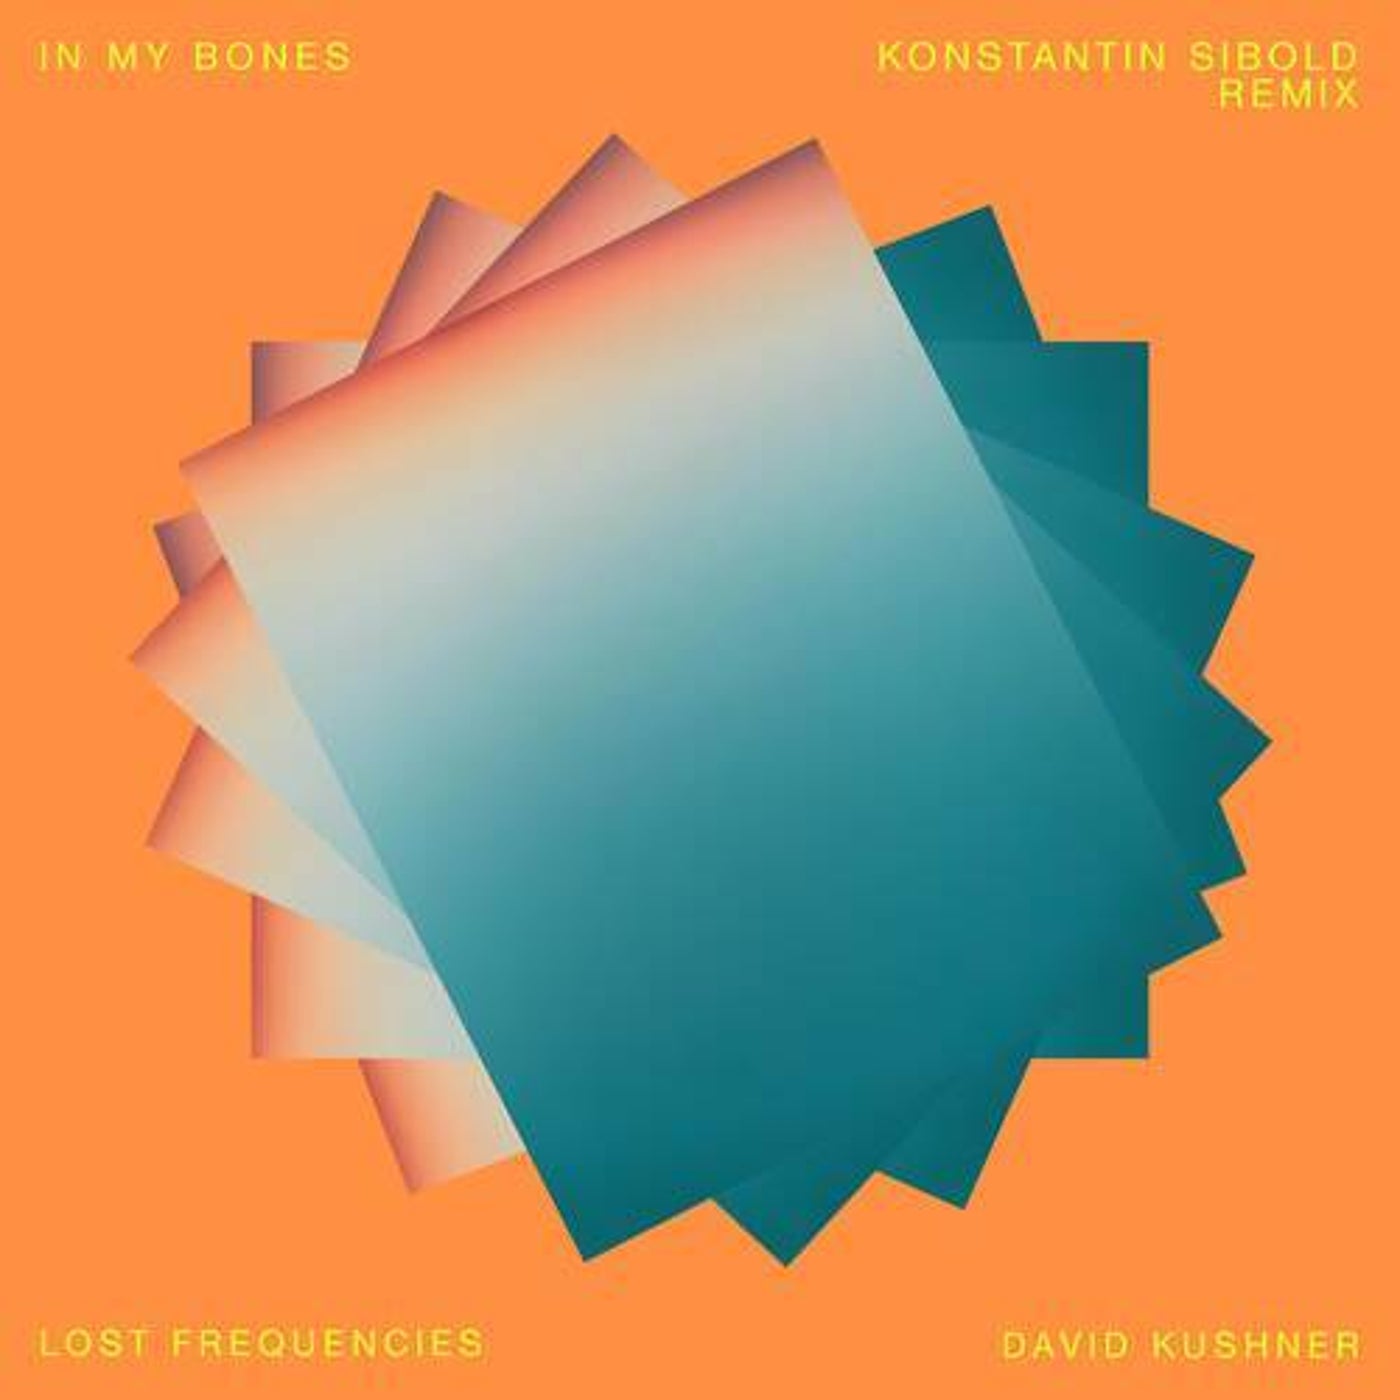 Lost Frequencies x David Kushner - In My Bones (Konstantin Sibold Extended Remix)